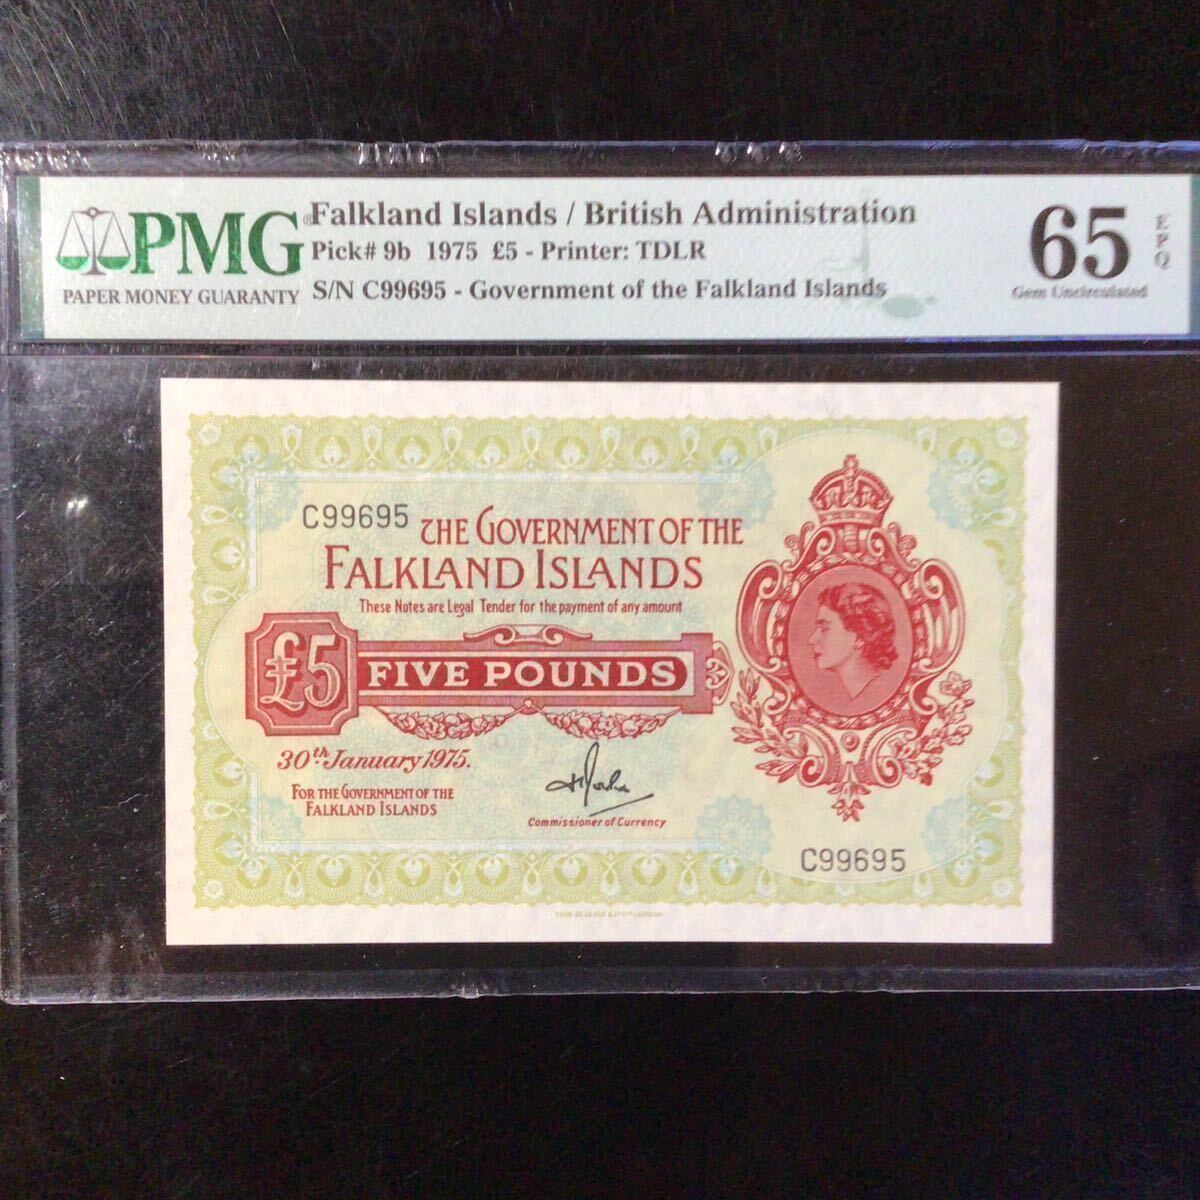 World Banknote Grading FALKLAND ISLANDS《British Administration》5 Pounds【1975】『PMG Grading Gem Uncirculated 65 EPQ』_画像1